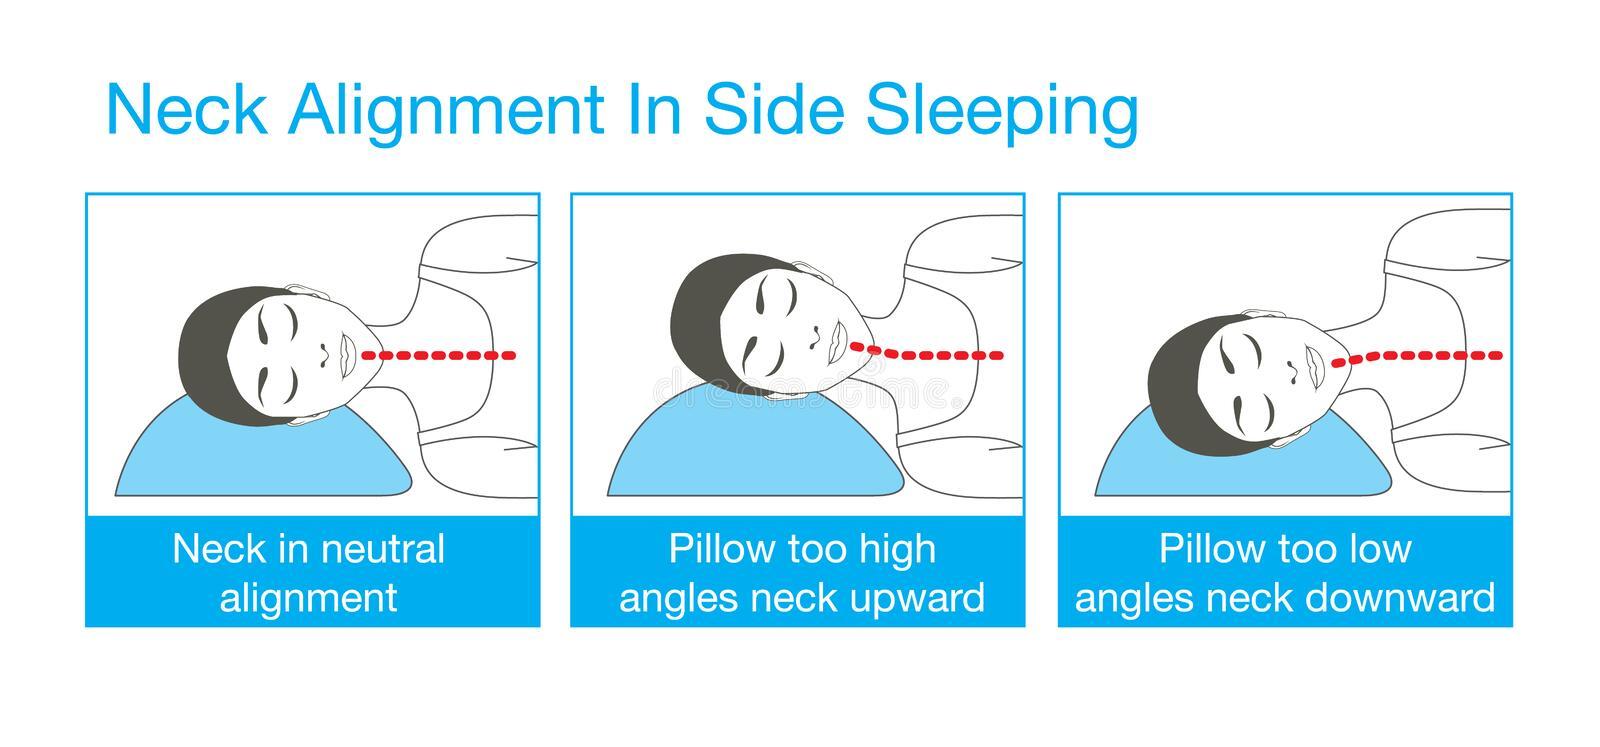 neck-alignment-side-sleeping